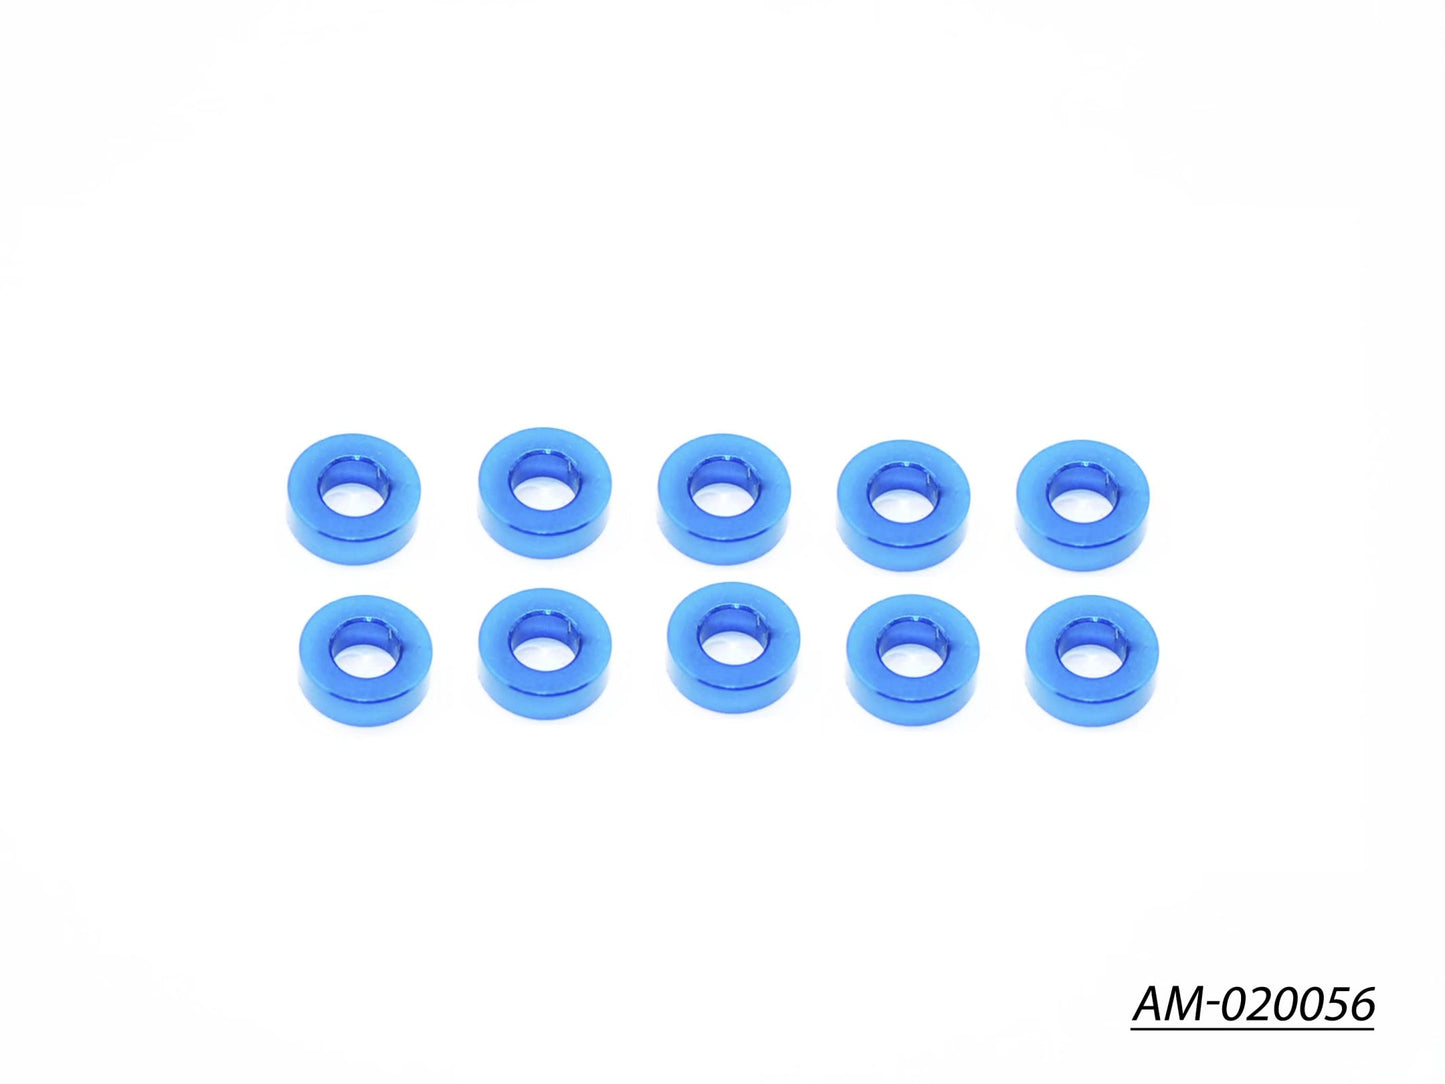 Alu Shims 3 x 6 x 2 Blue (10) (AM-020056)